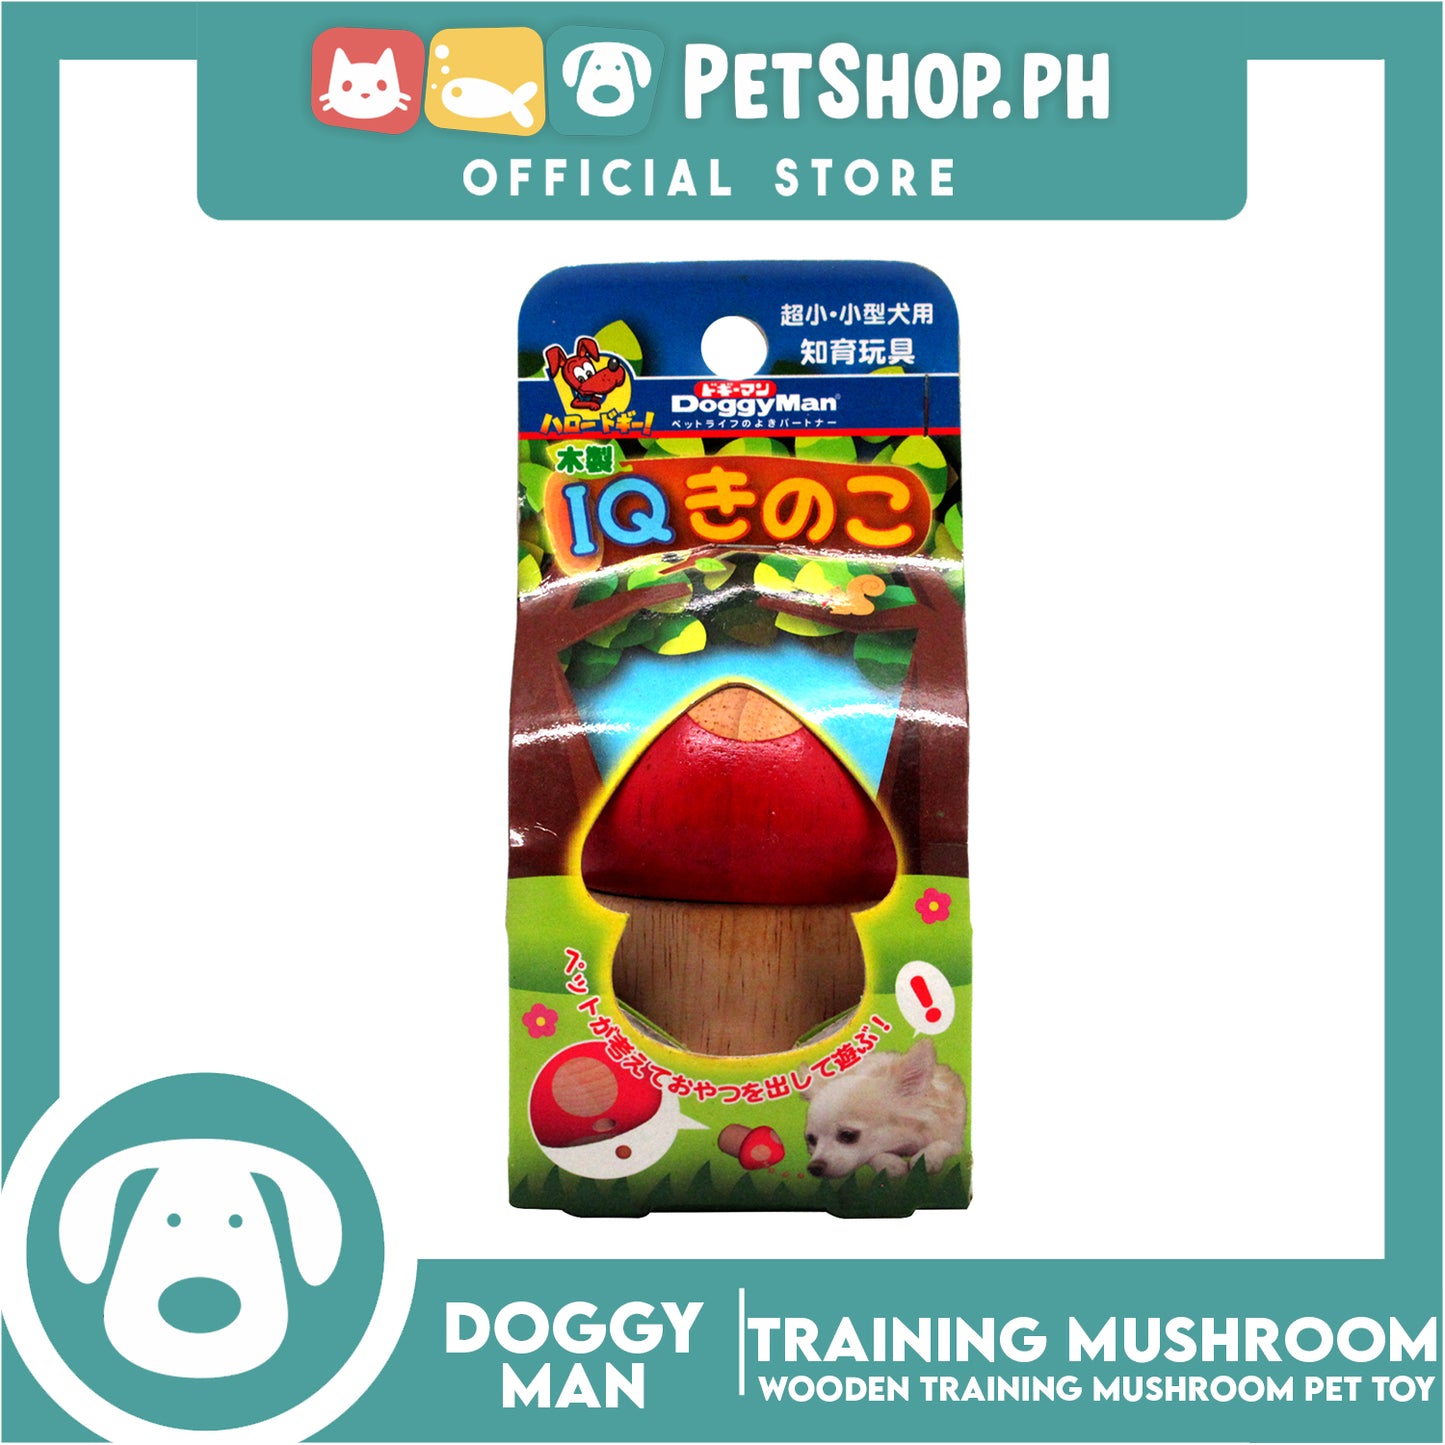 Doggyman Wooden Training Toy IQ Mushroom (85622)